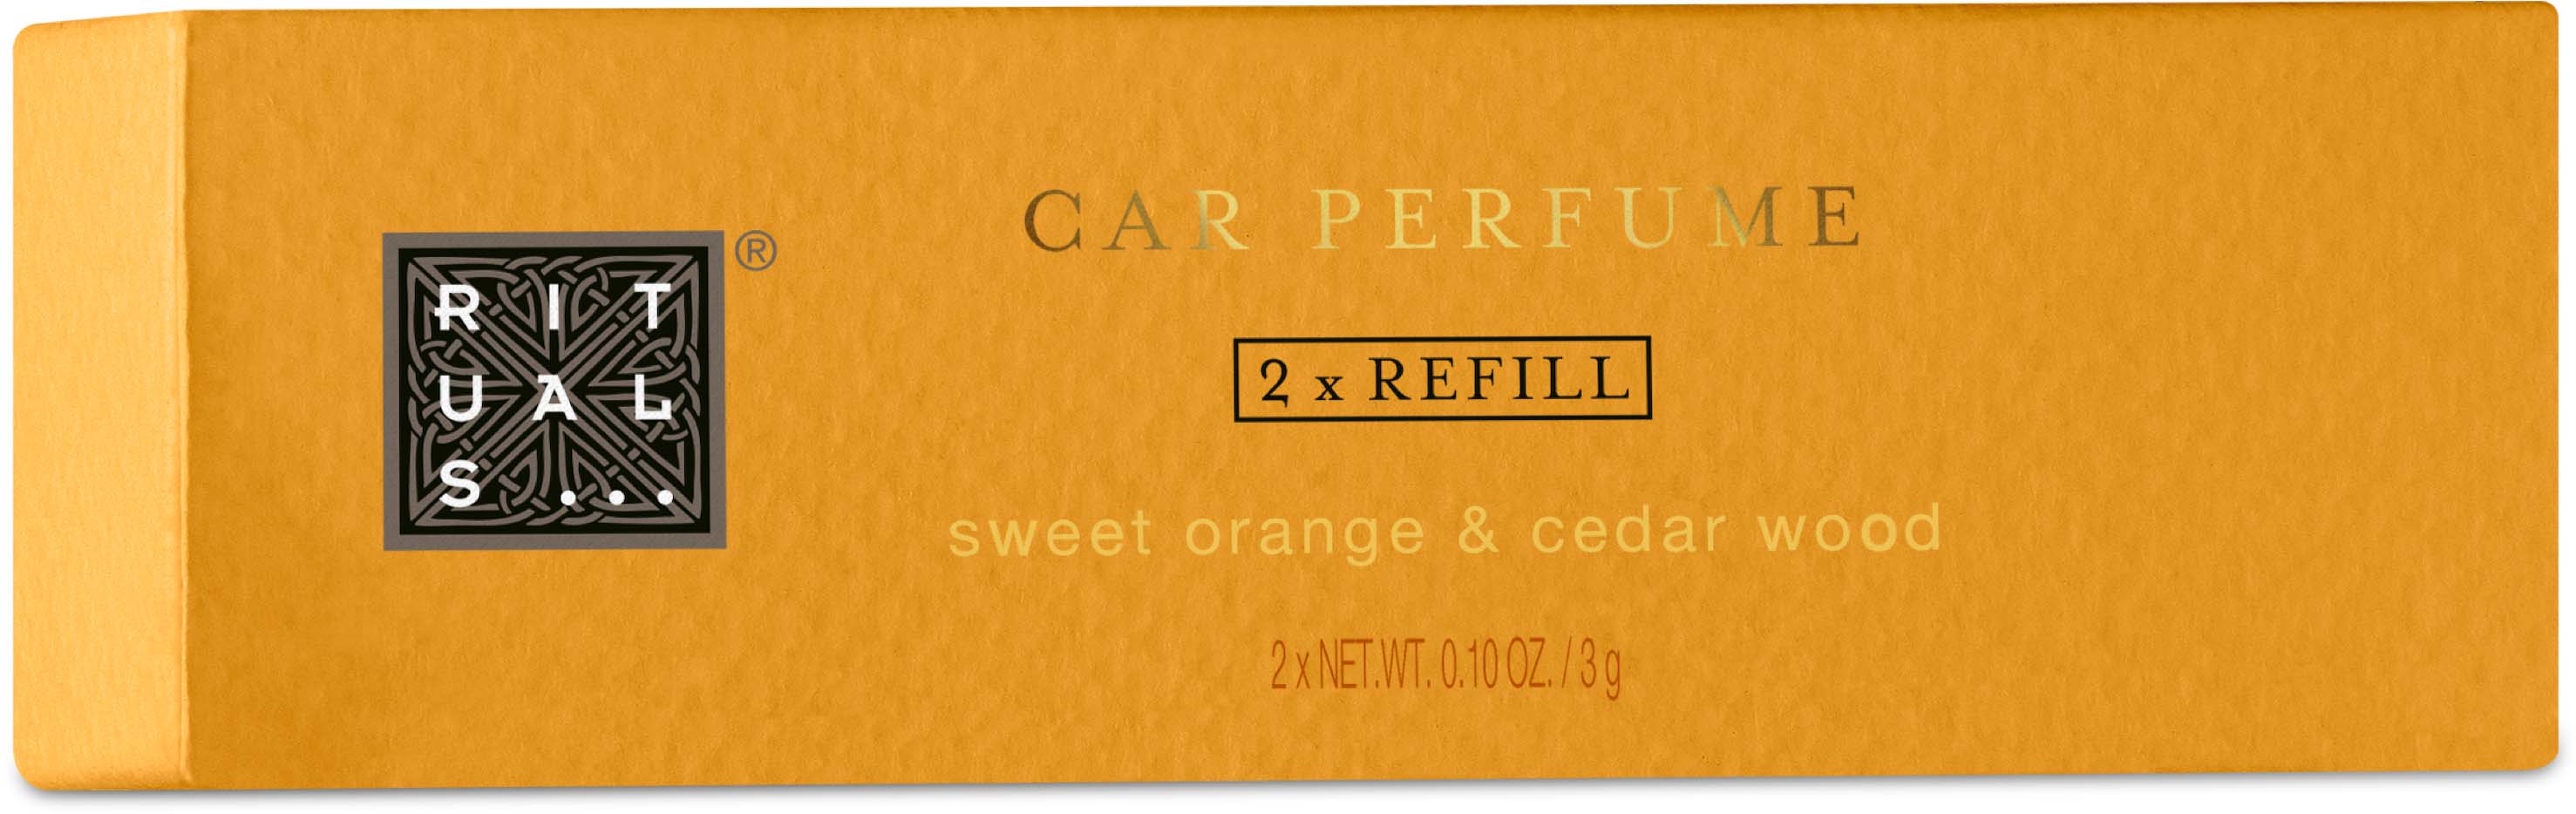 Rituals - Refill Karma Car Perfume •